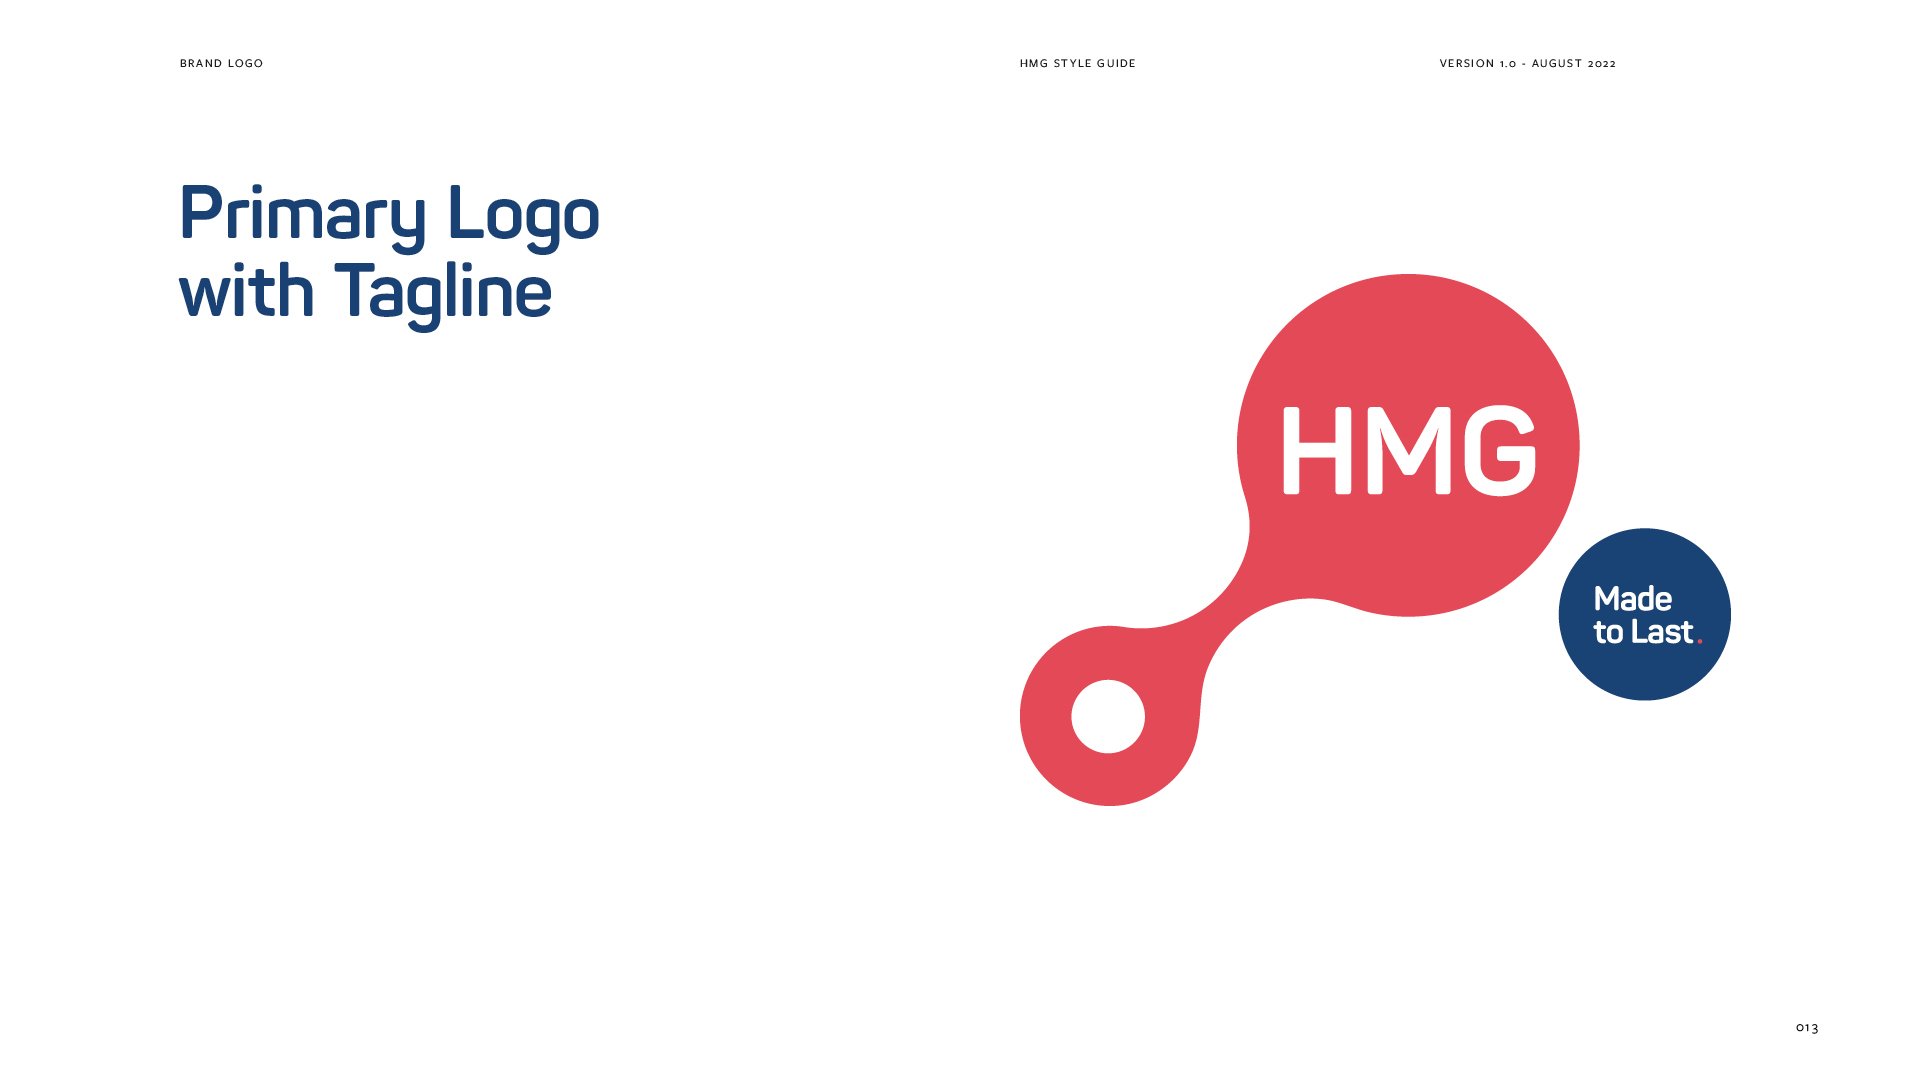 HMG Brand Style Guide13.jpg